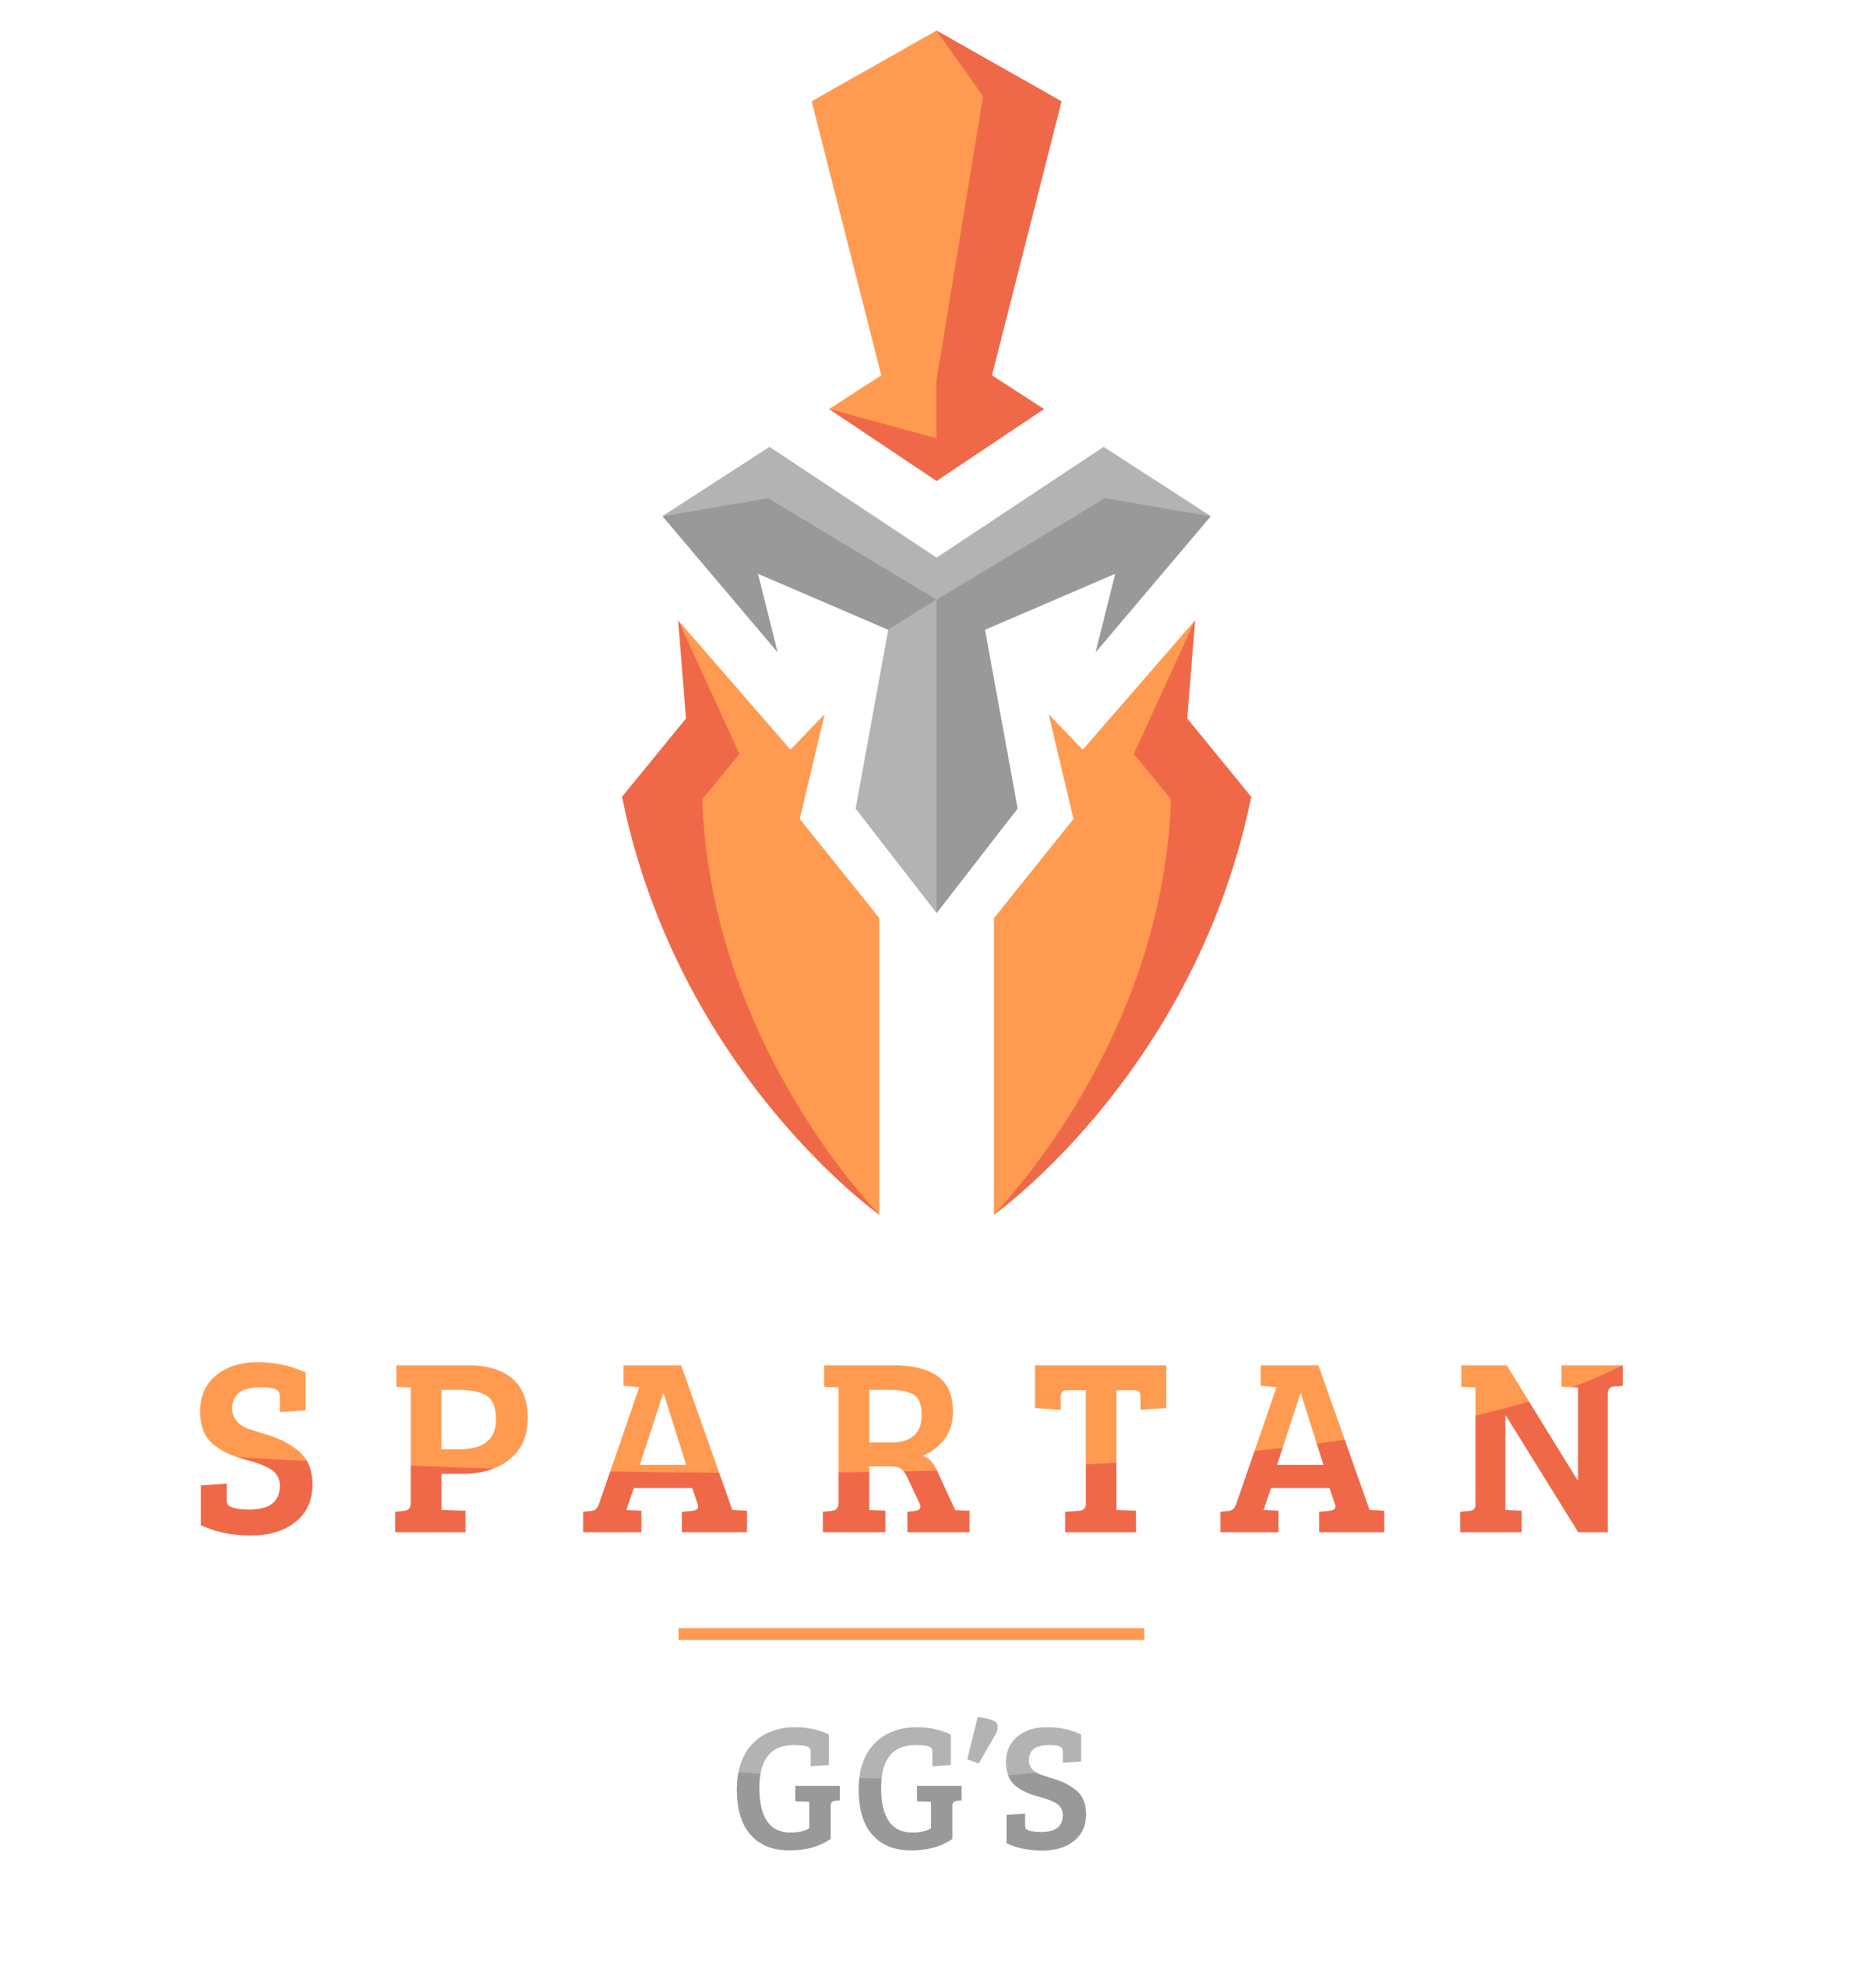 Spartan GGS